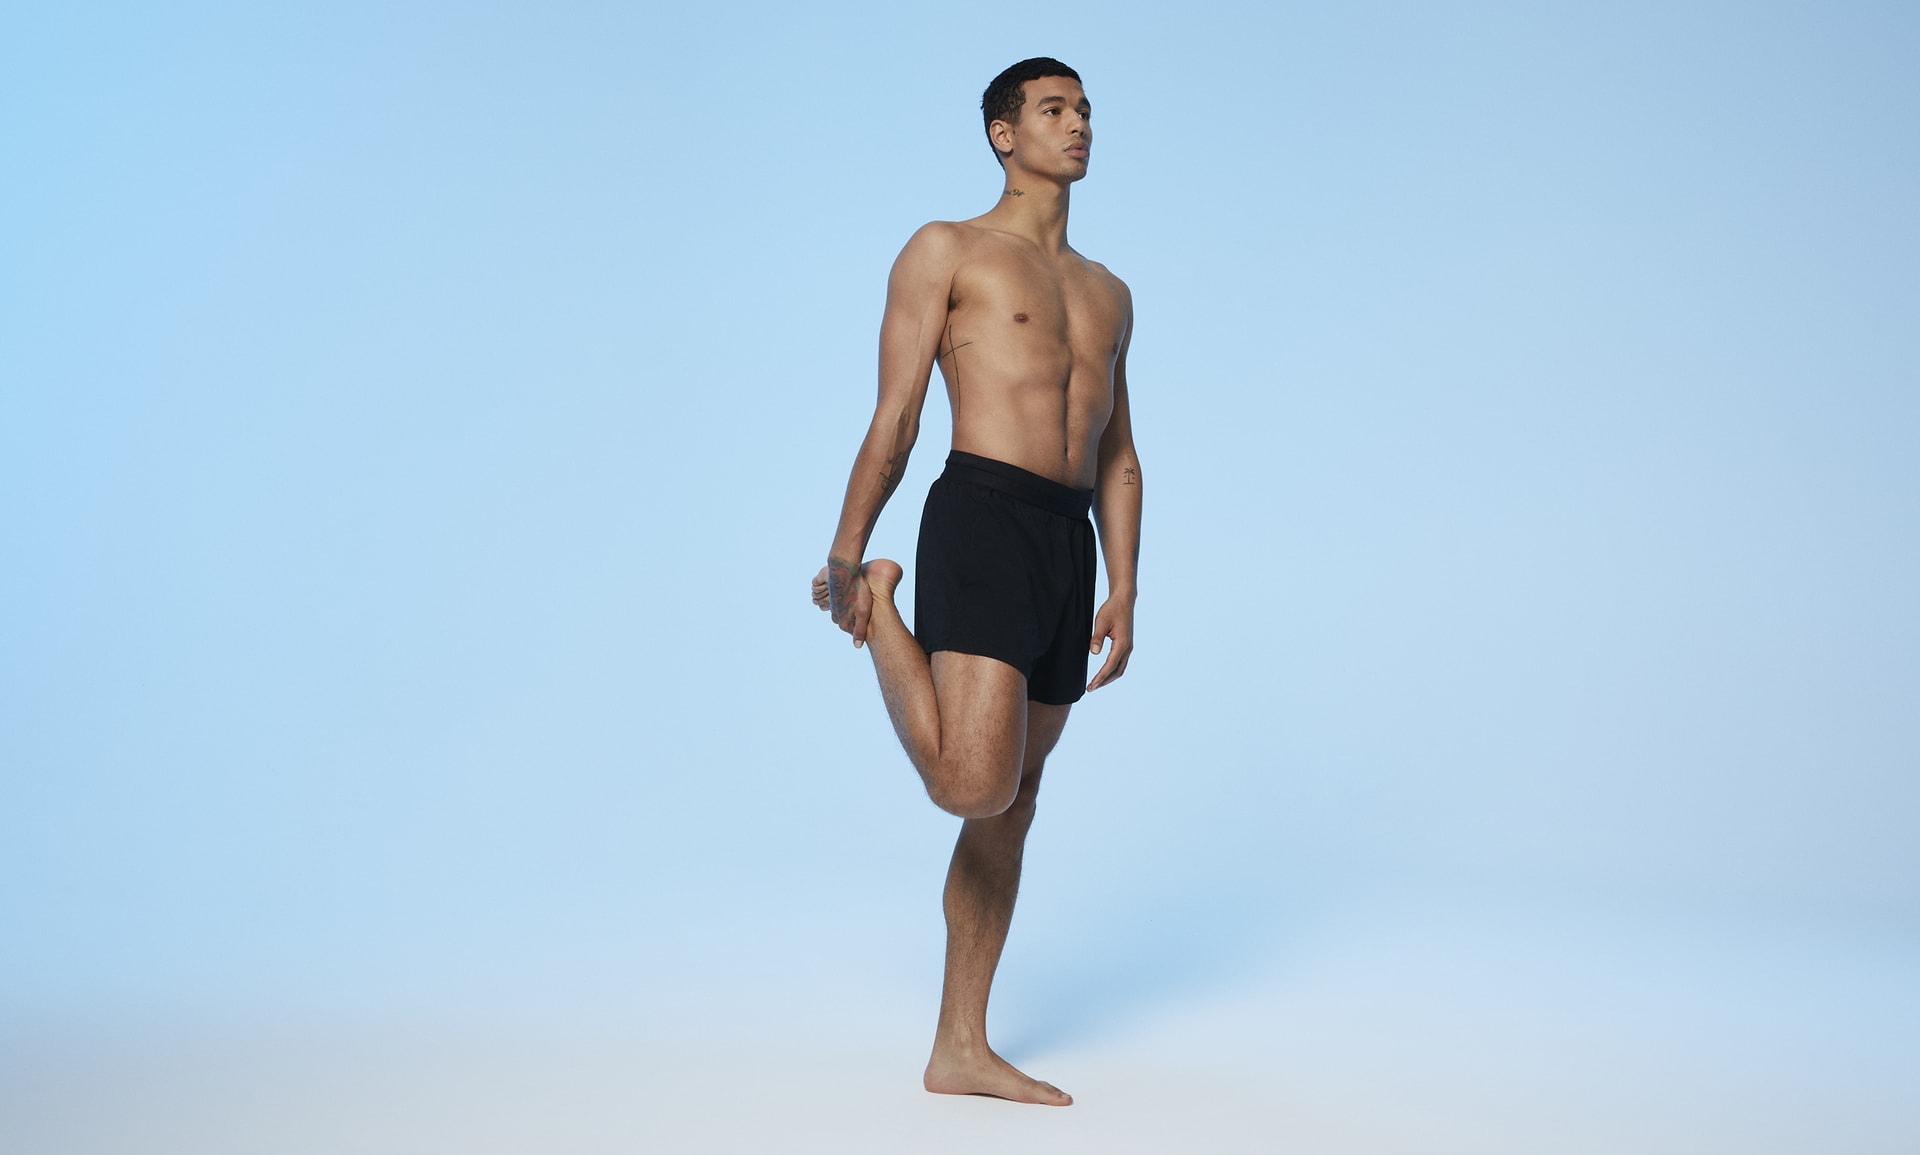 Nike Yoga Men's Hot Yoga Shorts Midnight Navy DN1520-410 Men Large